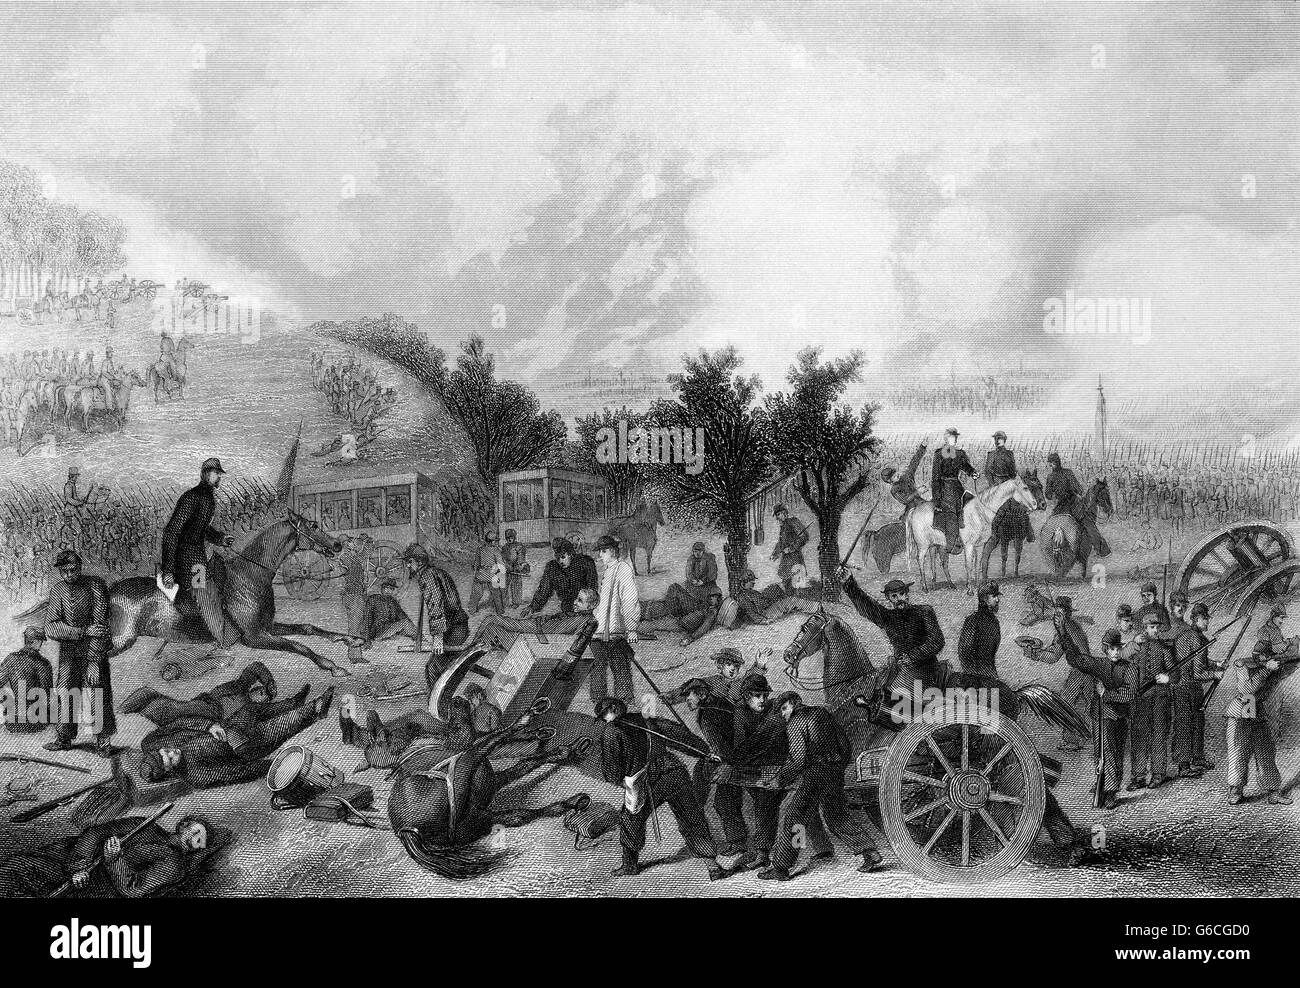 1860 Juillet 1863 BATAILLE DE GETTYSBURG Banque D'Images